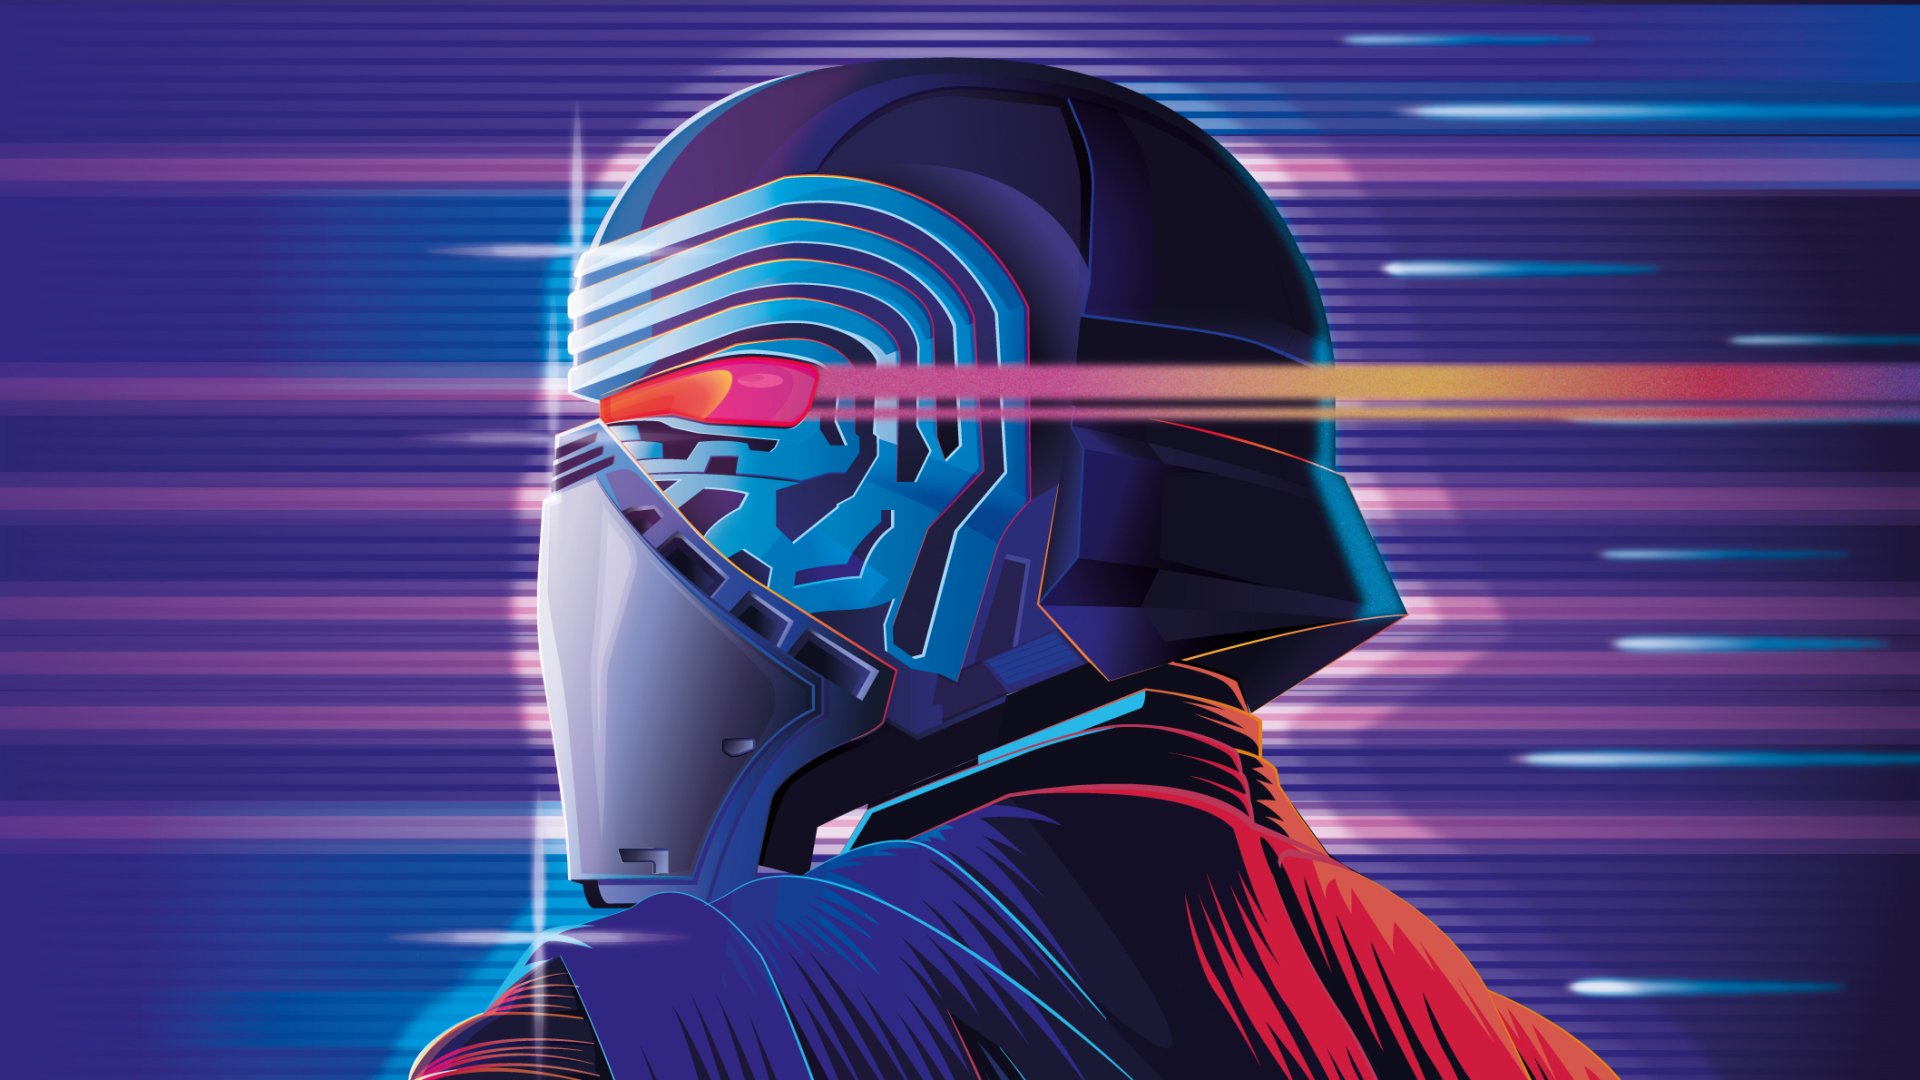 2116x1190 Sci Fi Star Wars Wallpaper Background Image. 